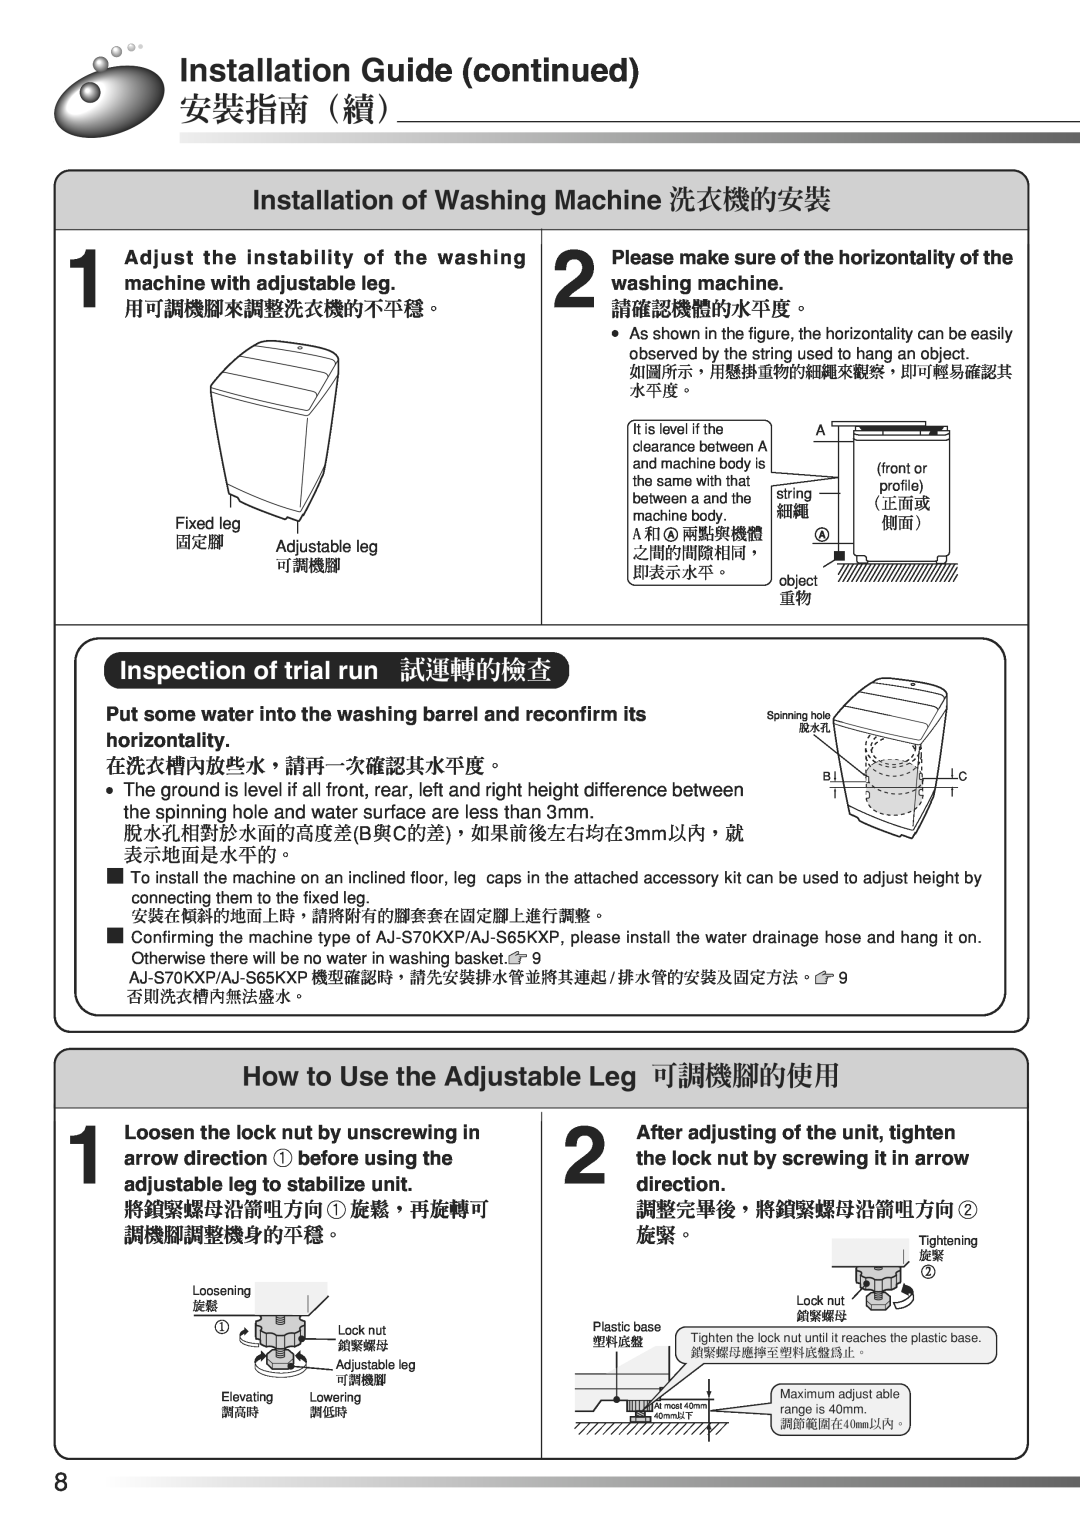 Hitachi AJ-S70KX Installation Guide continued, 安裝指南（續）, How to Use the Adjustable Leg 可調機腳的使用, 用可調機腳來調整洗衣機的不平穩。, 之間的間隙相同， 